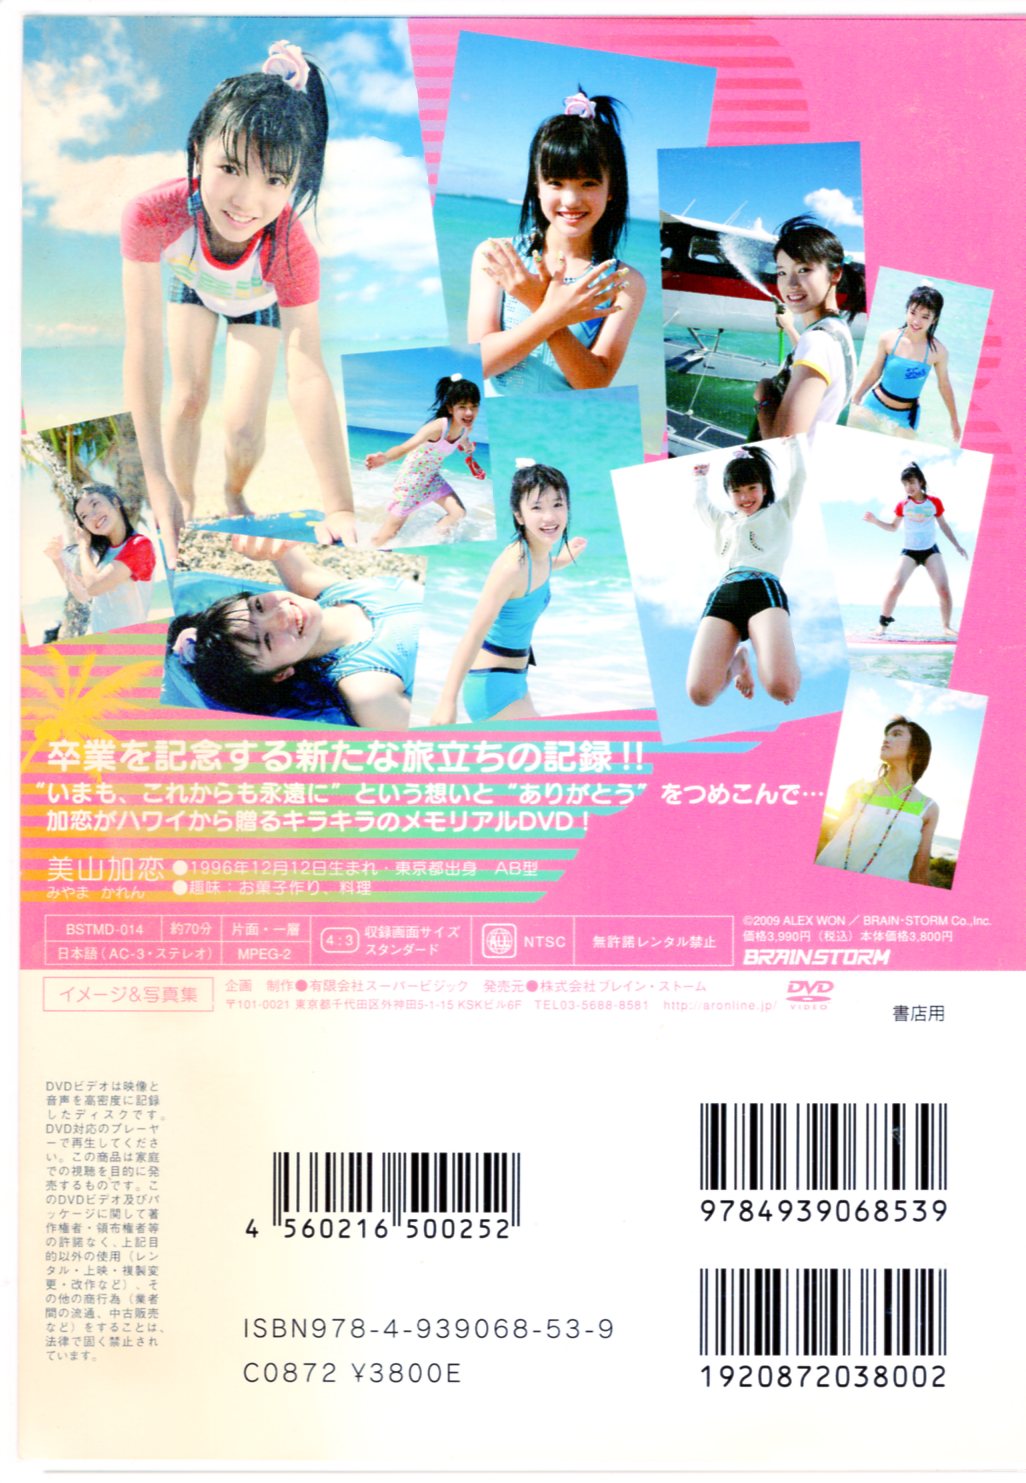 BRAIN STOME(美山加恋) DVD no na kau a kau いまも、これからも永遠に 